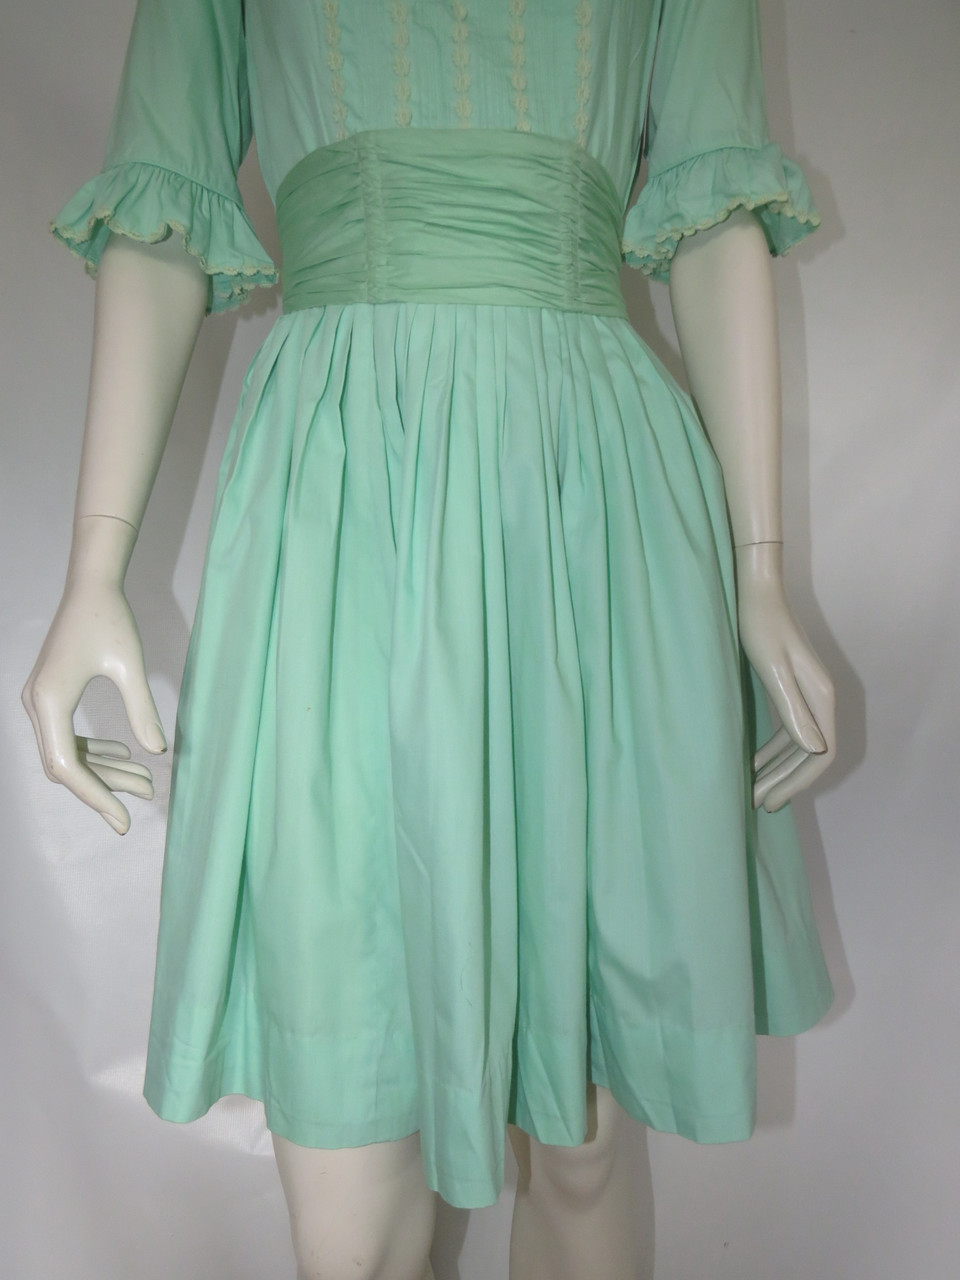 Bobbie Brooks Mint Green Ruffle Dress w Cream Lace - Orlando Vintage  Clothing and Costume